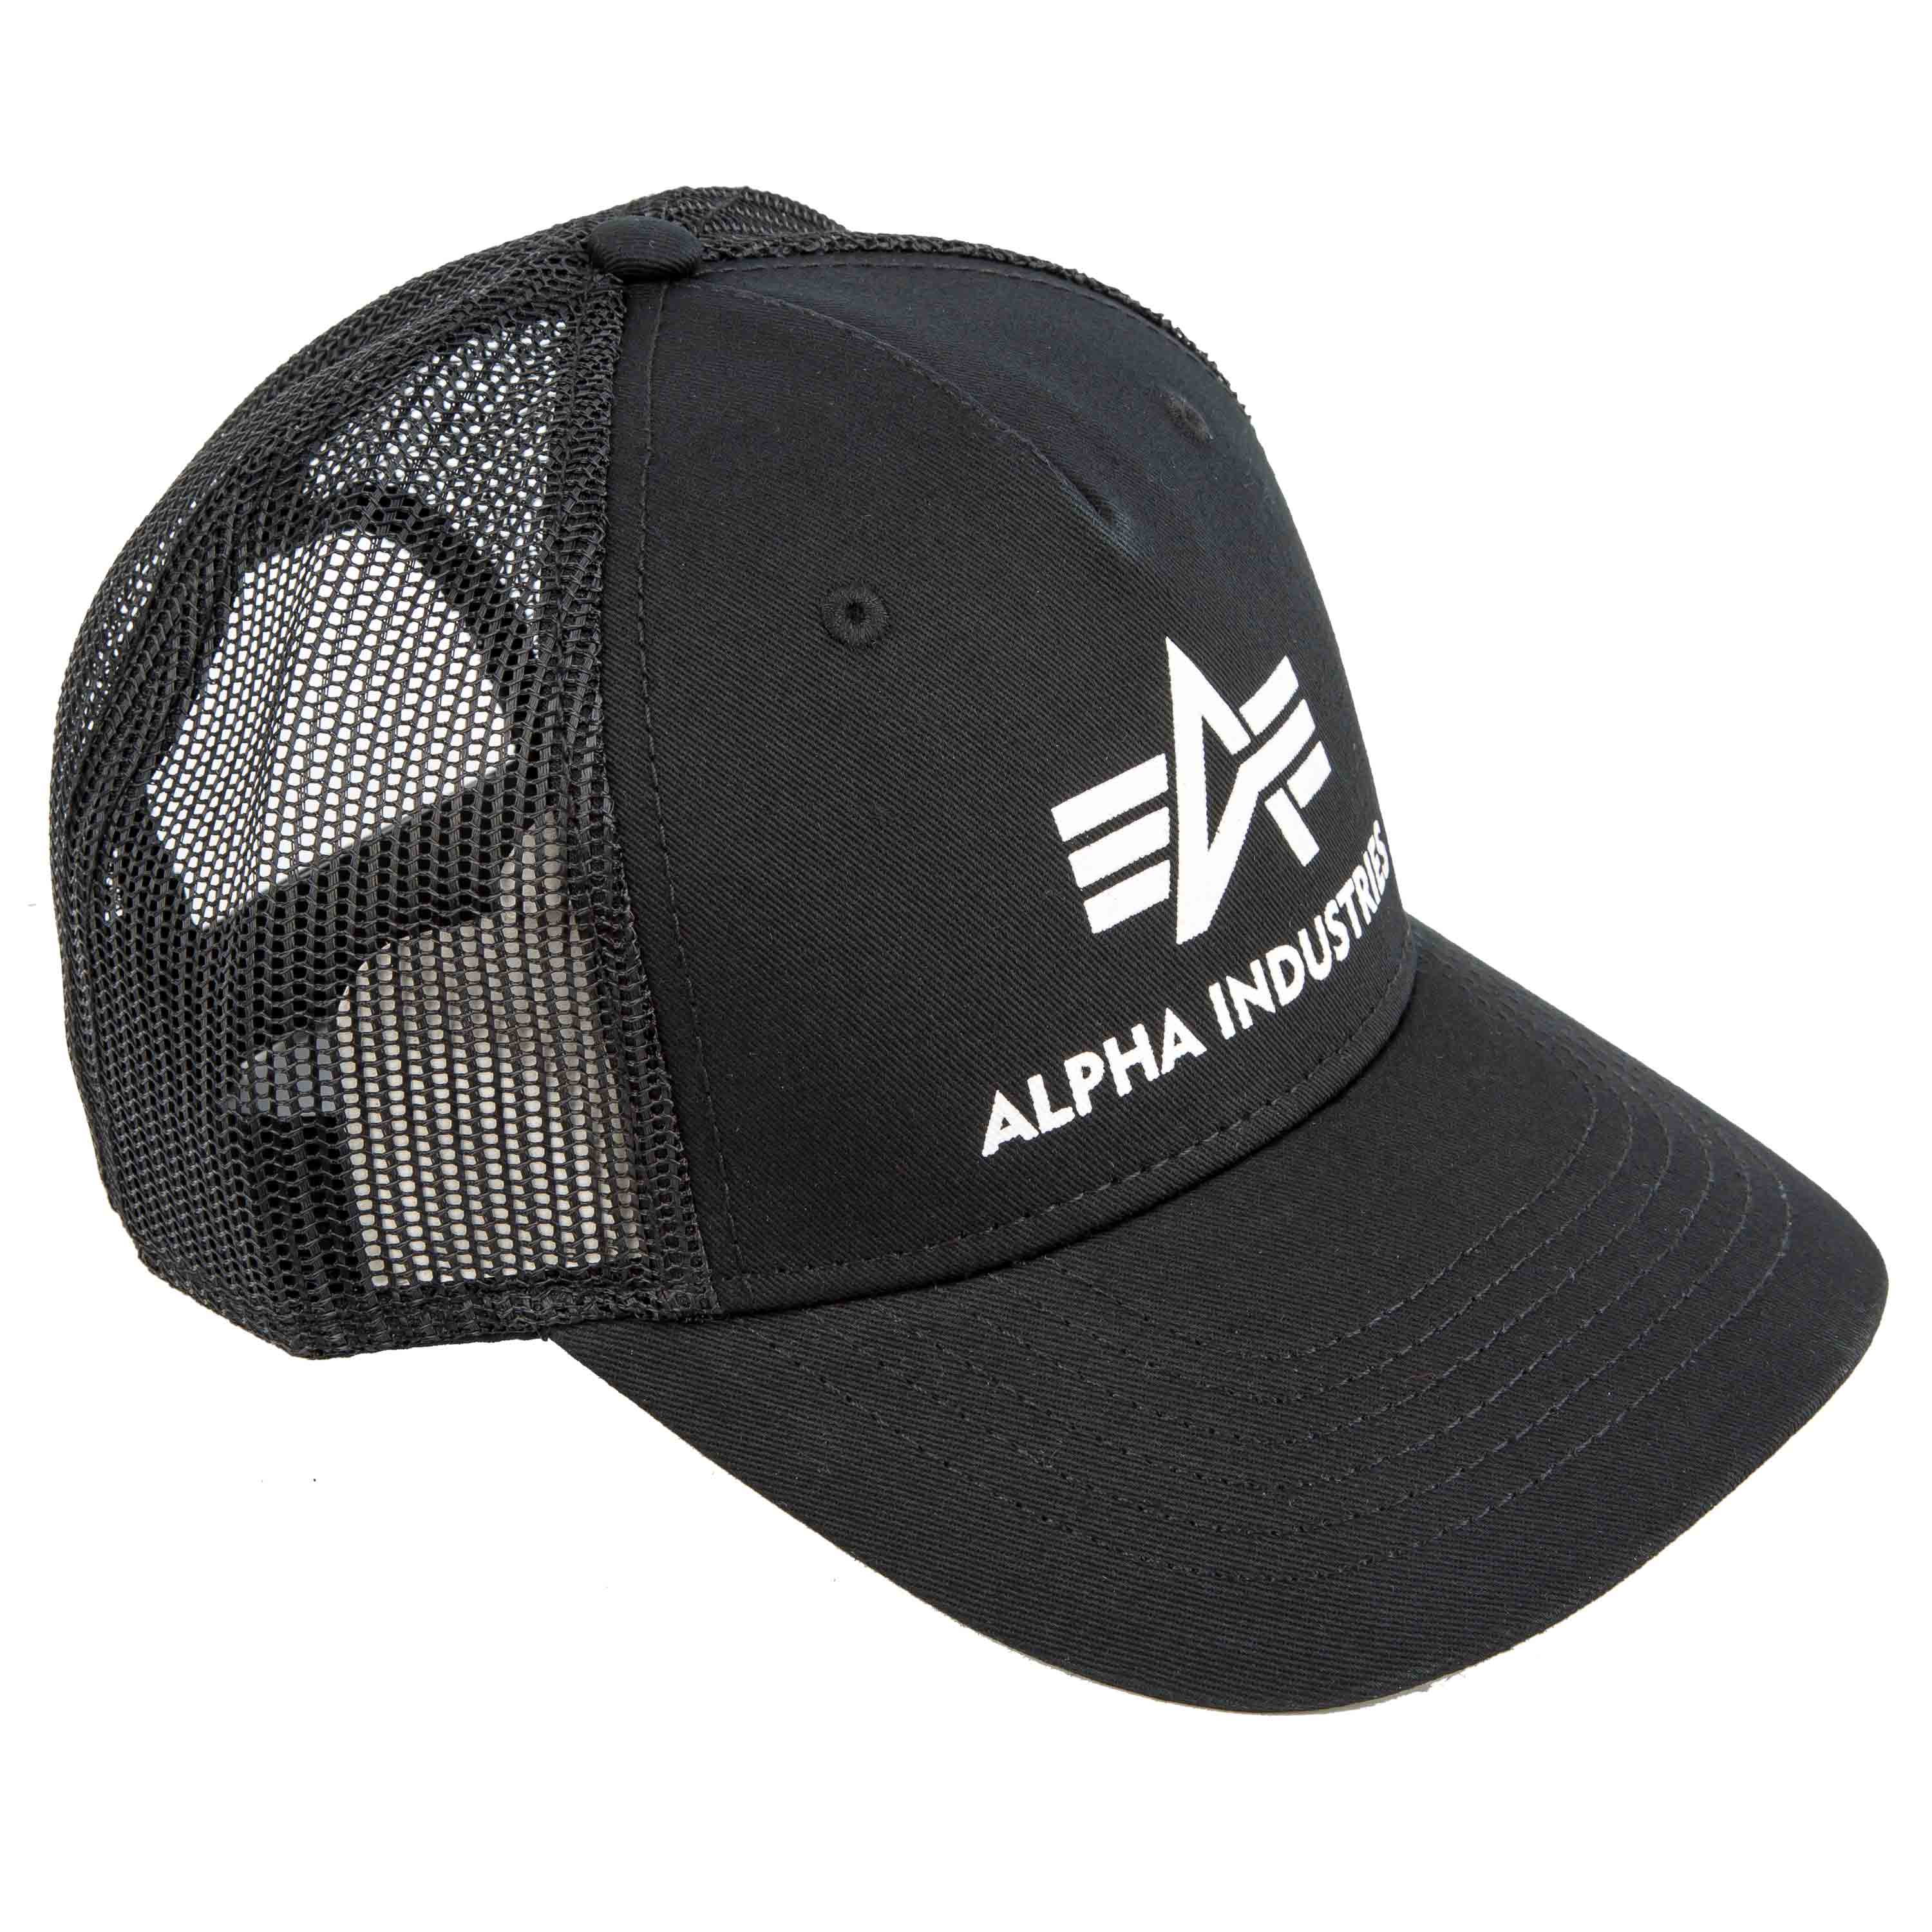 Cap Alpha b Purchase Basic the Trucker Baseball black Industries